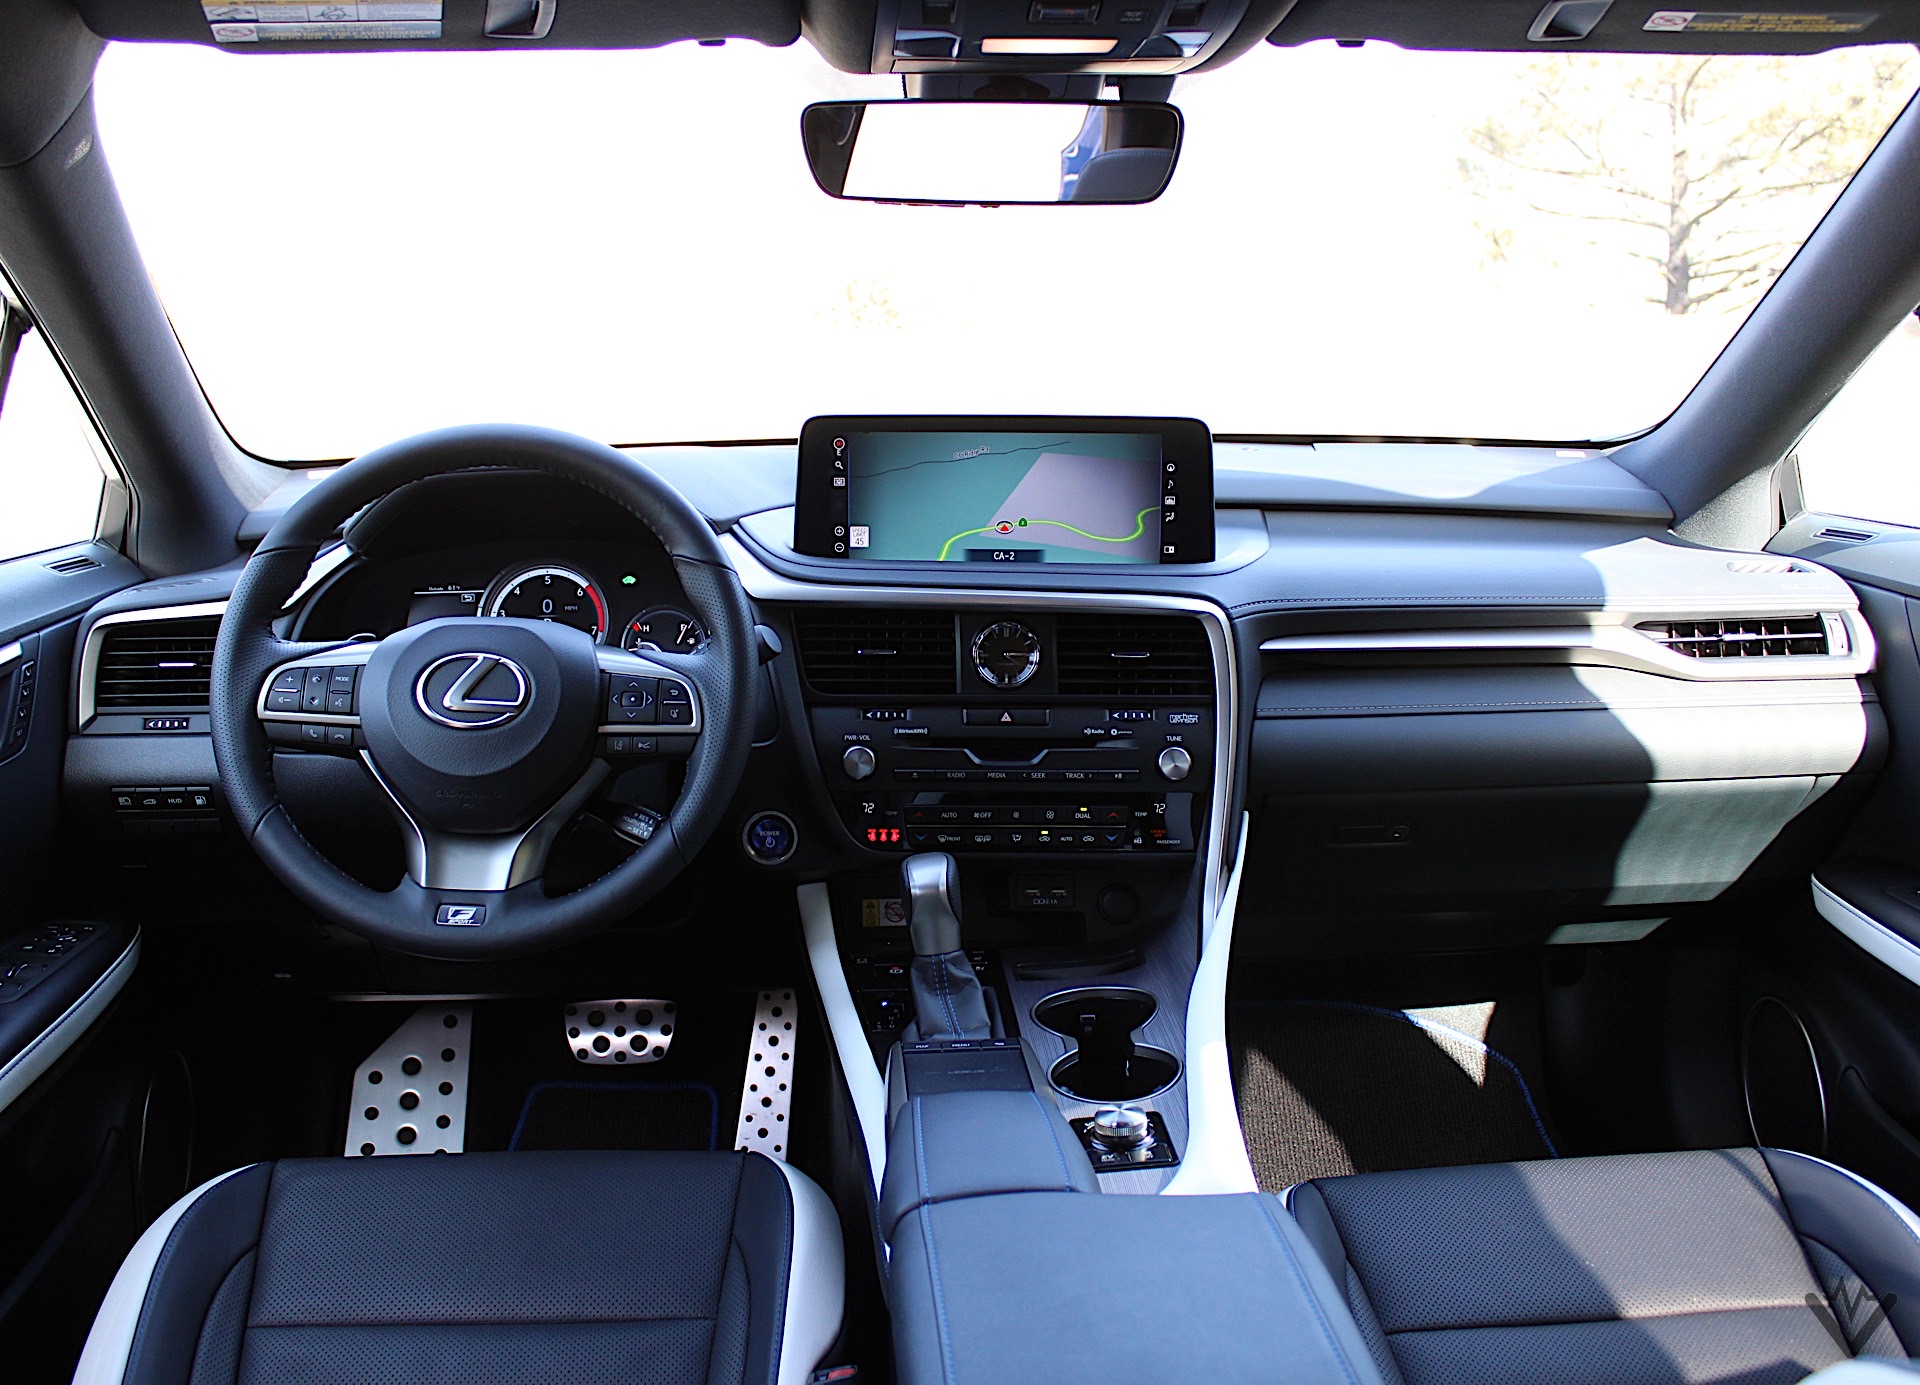 2021 Lexus RX 450h Black Line Edition interior 01 1